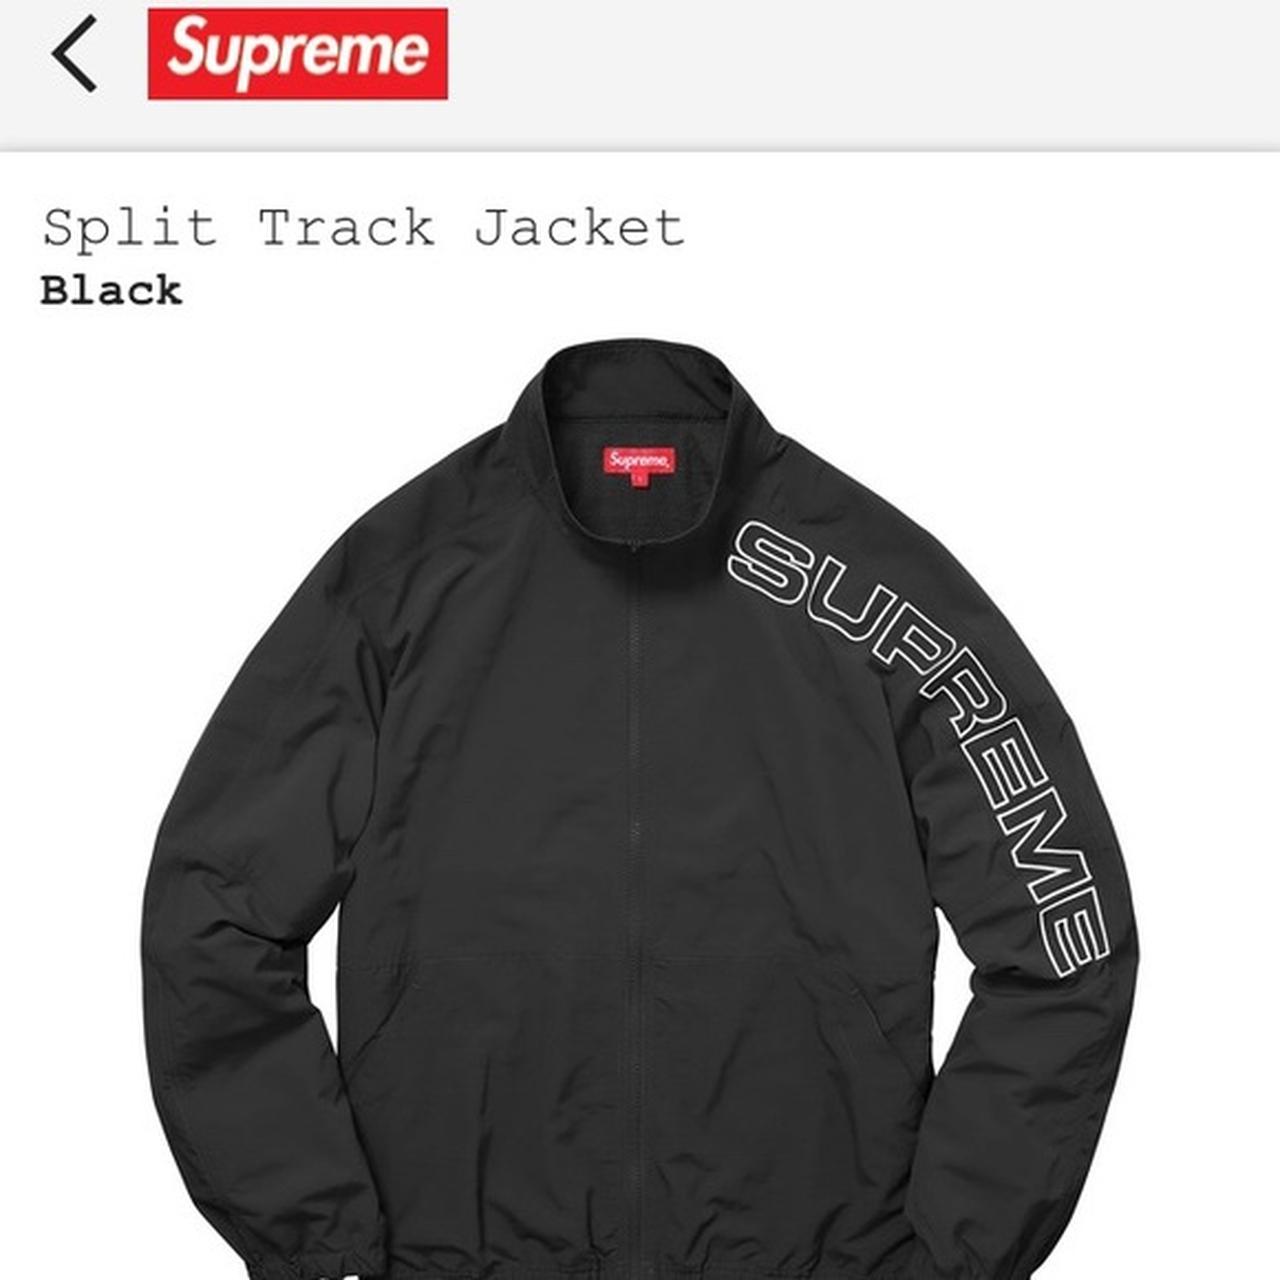 Supreme Split Track Jacket in black. from SS’17....